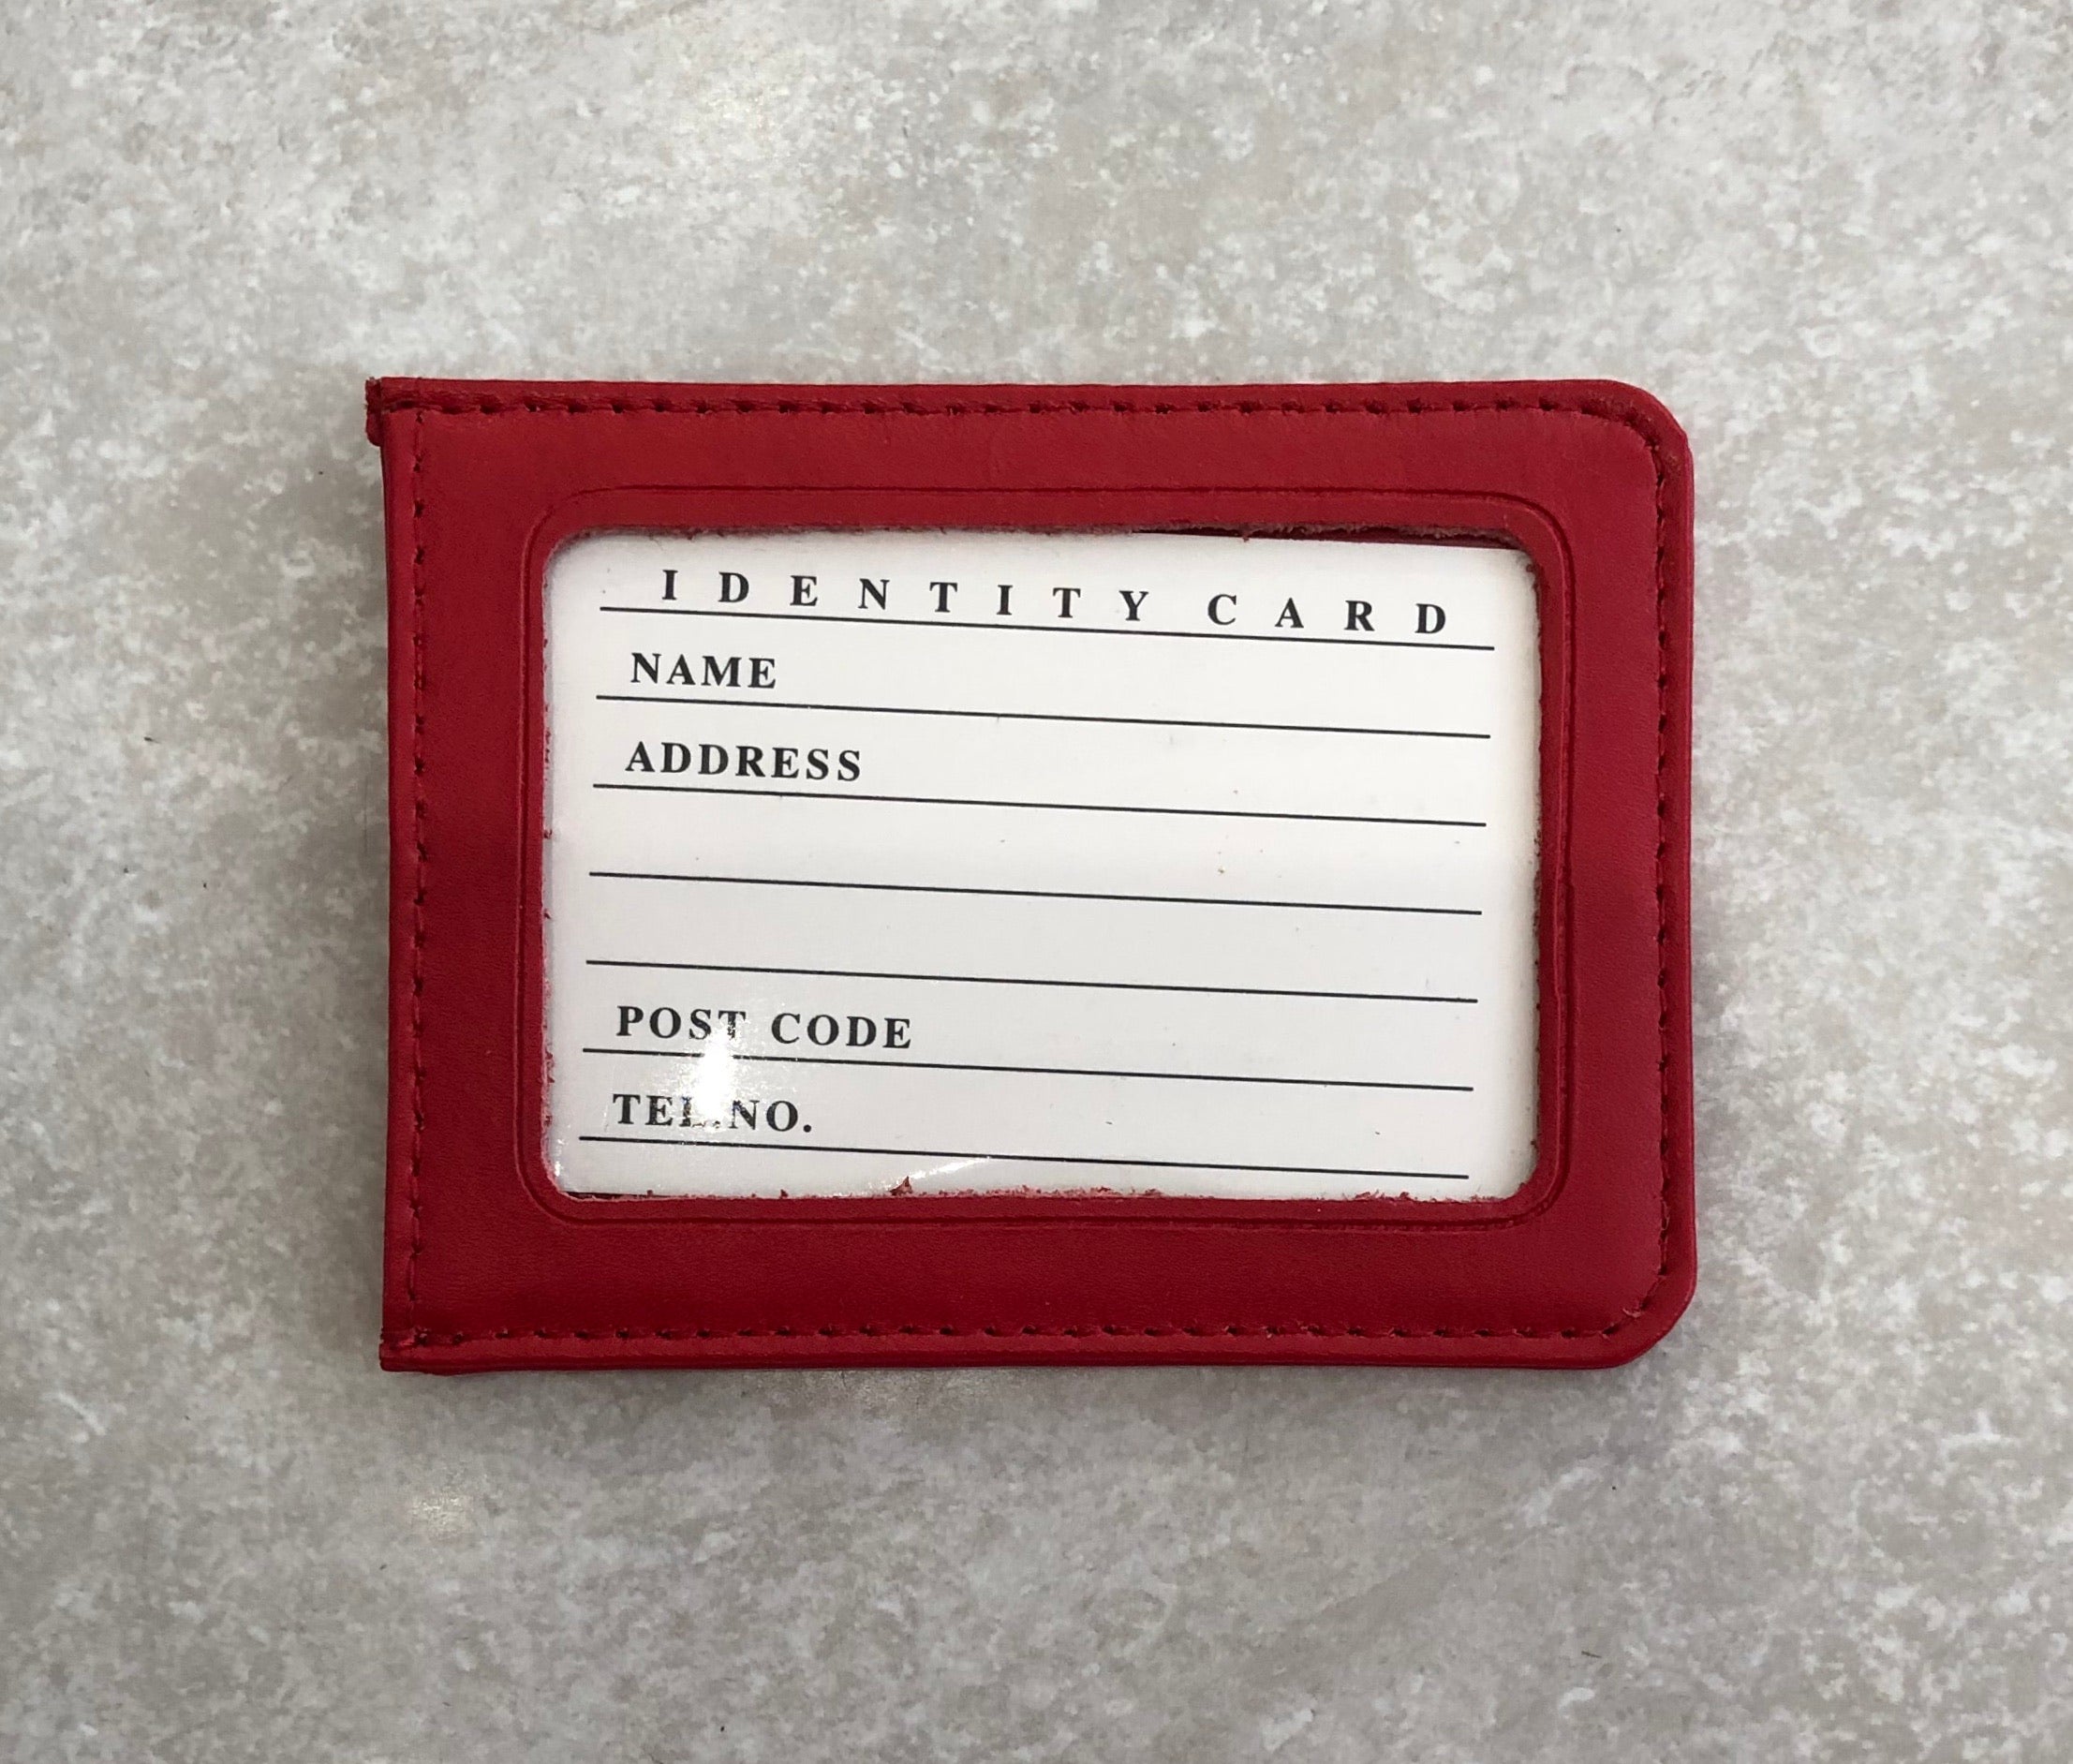 Leather single side Travel Card Holder